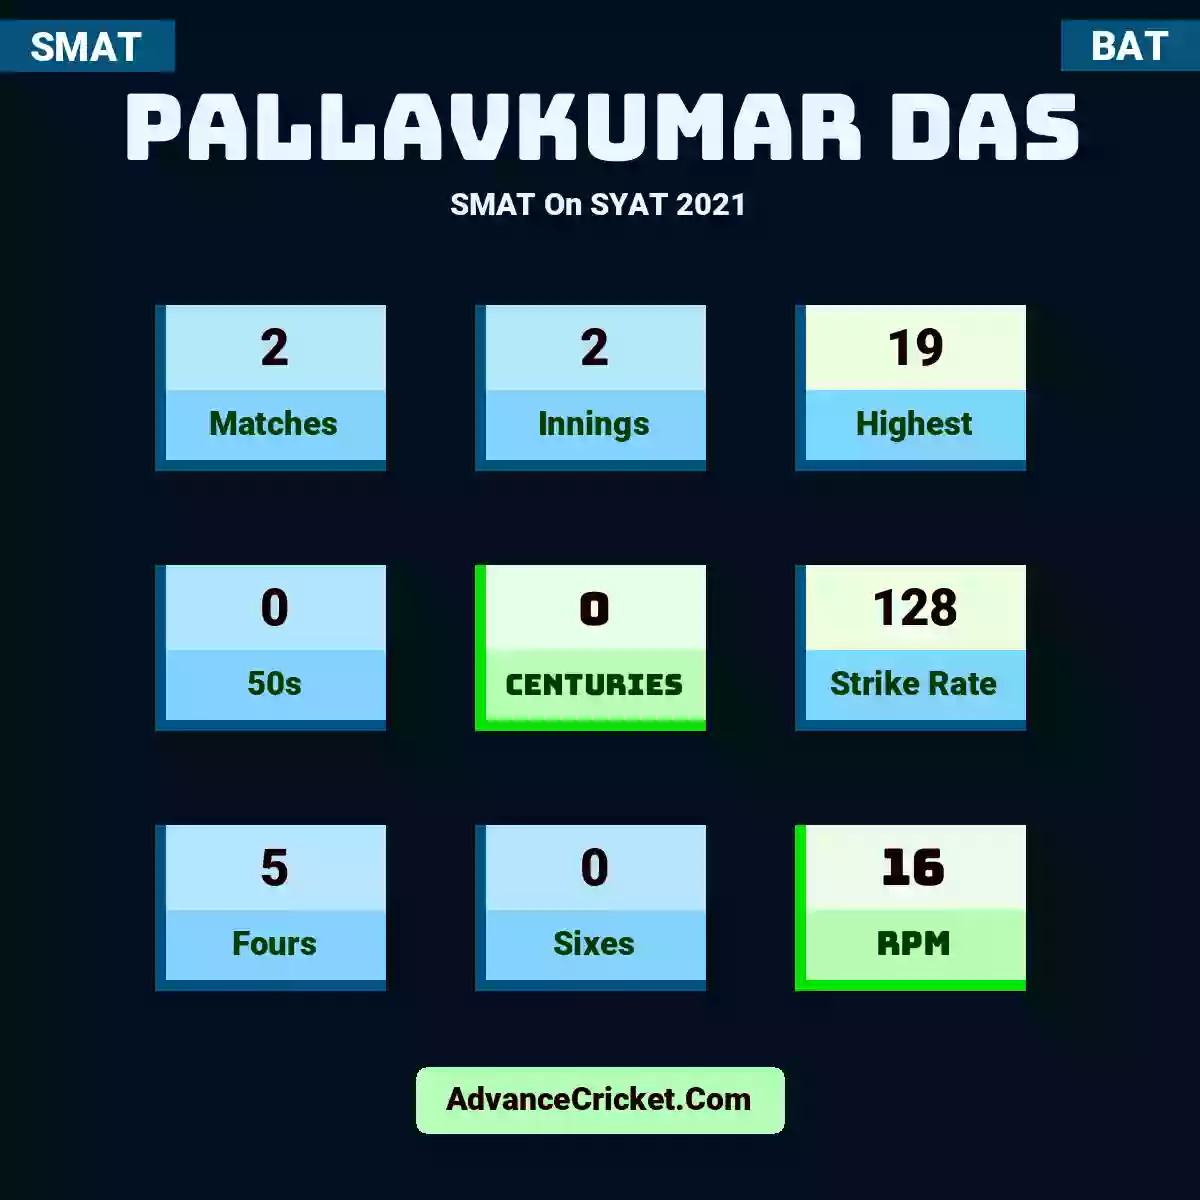 Pallavkumar Das SMAT  On SYAT 2021, Pallavkumar Das played 2 matches, scored 19 runs as highest, 0 half-centuries, and 0 centuries, with a strike rate of 128. P.Das hit 5 fours and 0 sixes, with an RPM of 16.